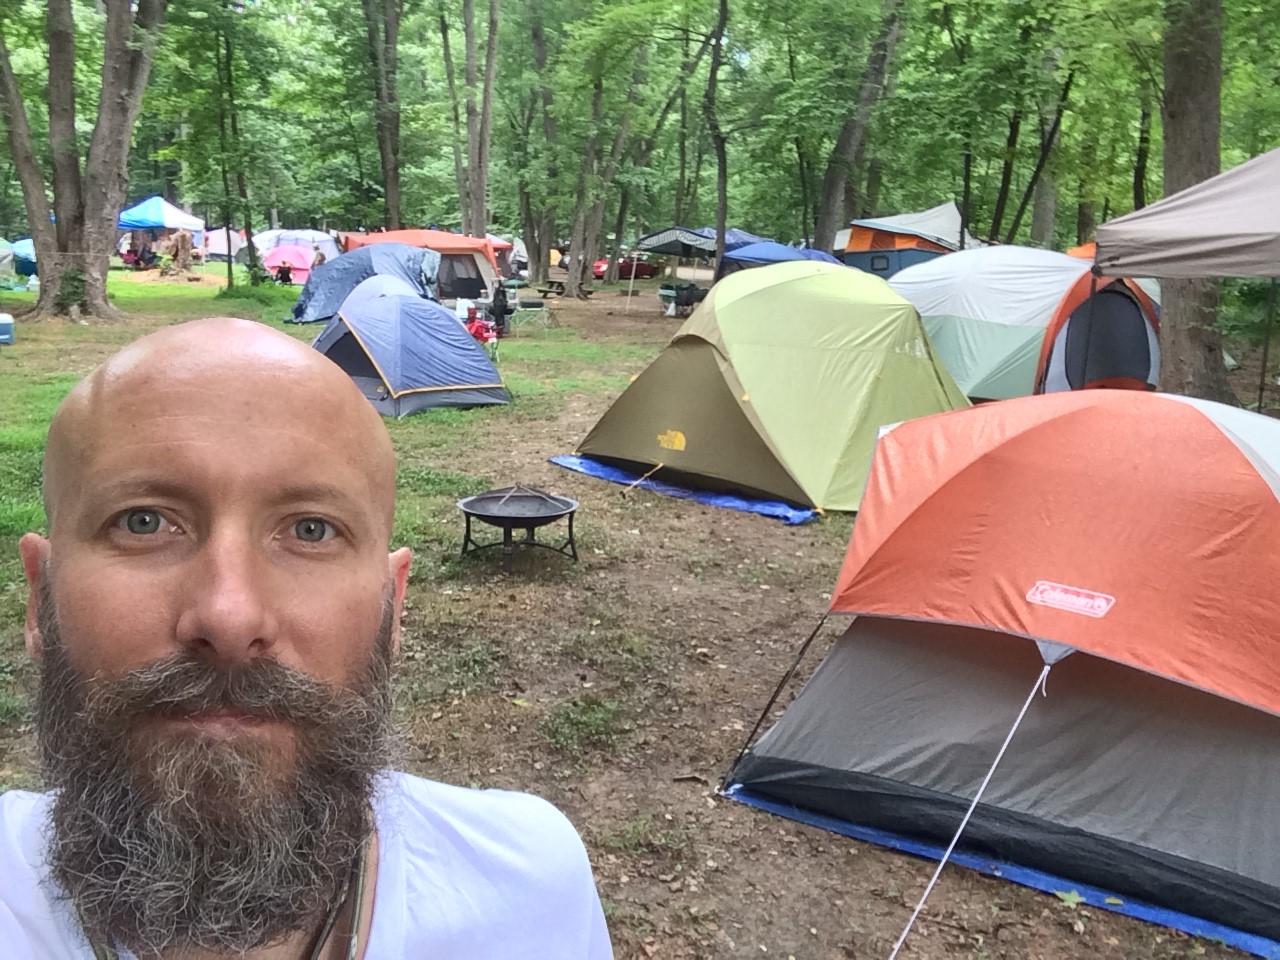 selfie of man in woods with tents